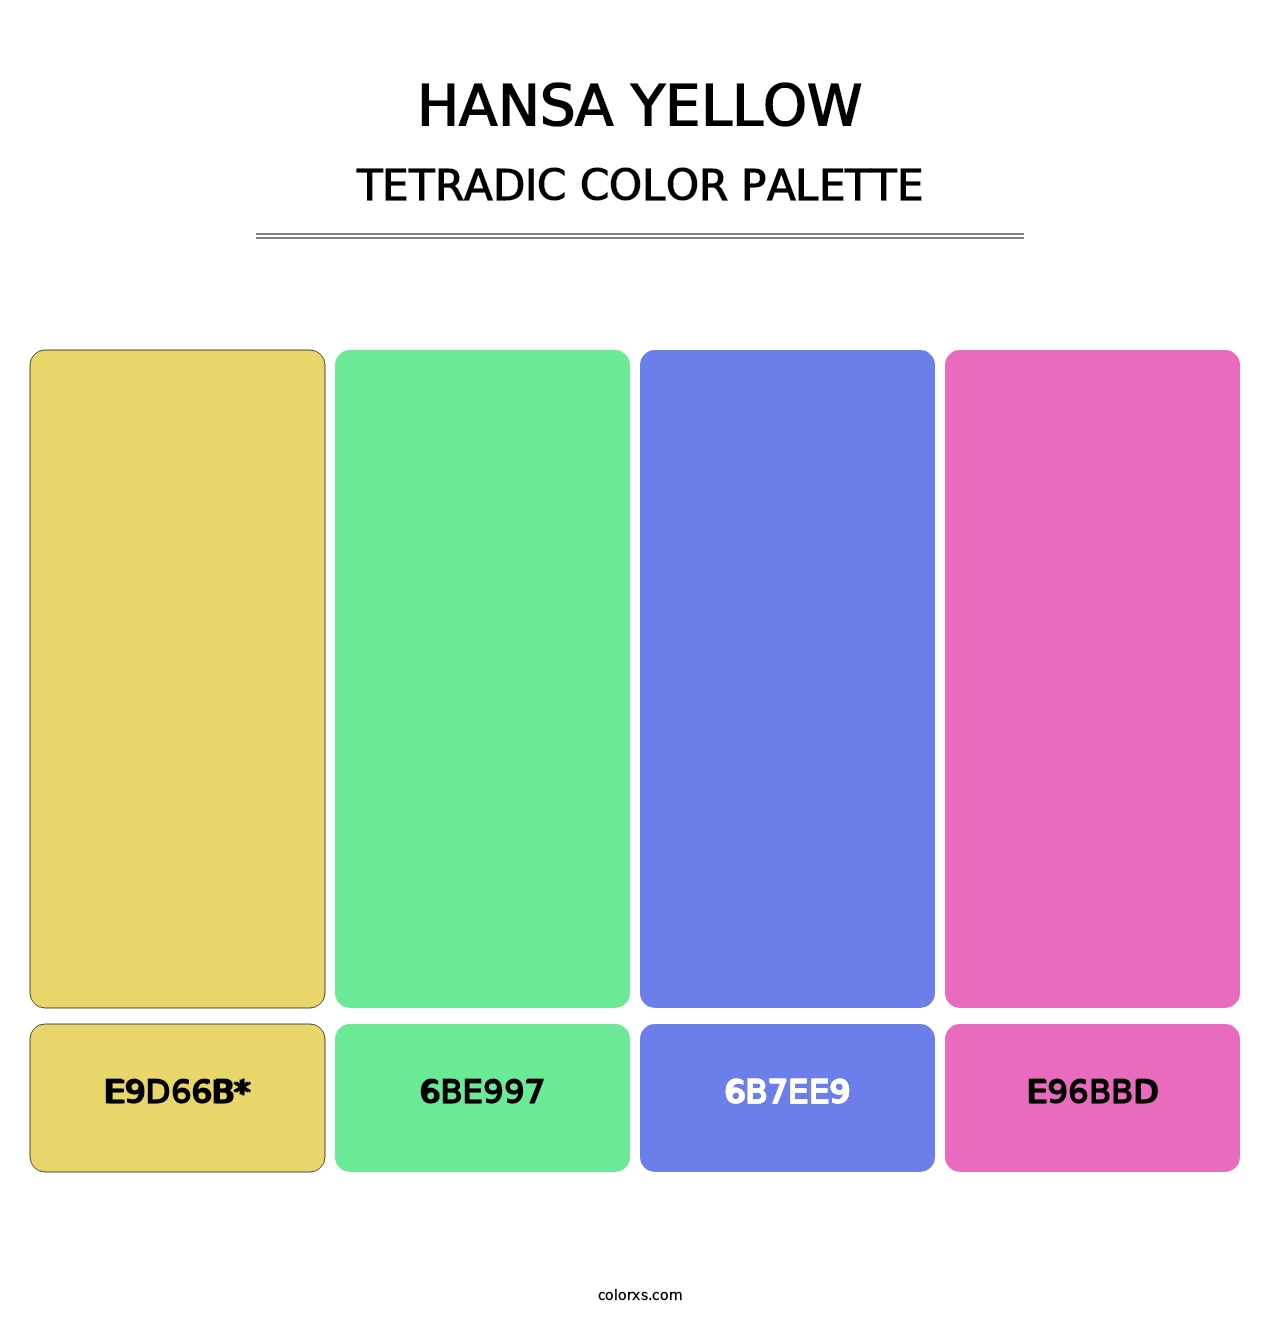 Hansa Yellow - Tetradic Color Palette